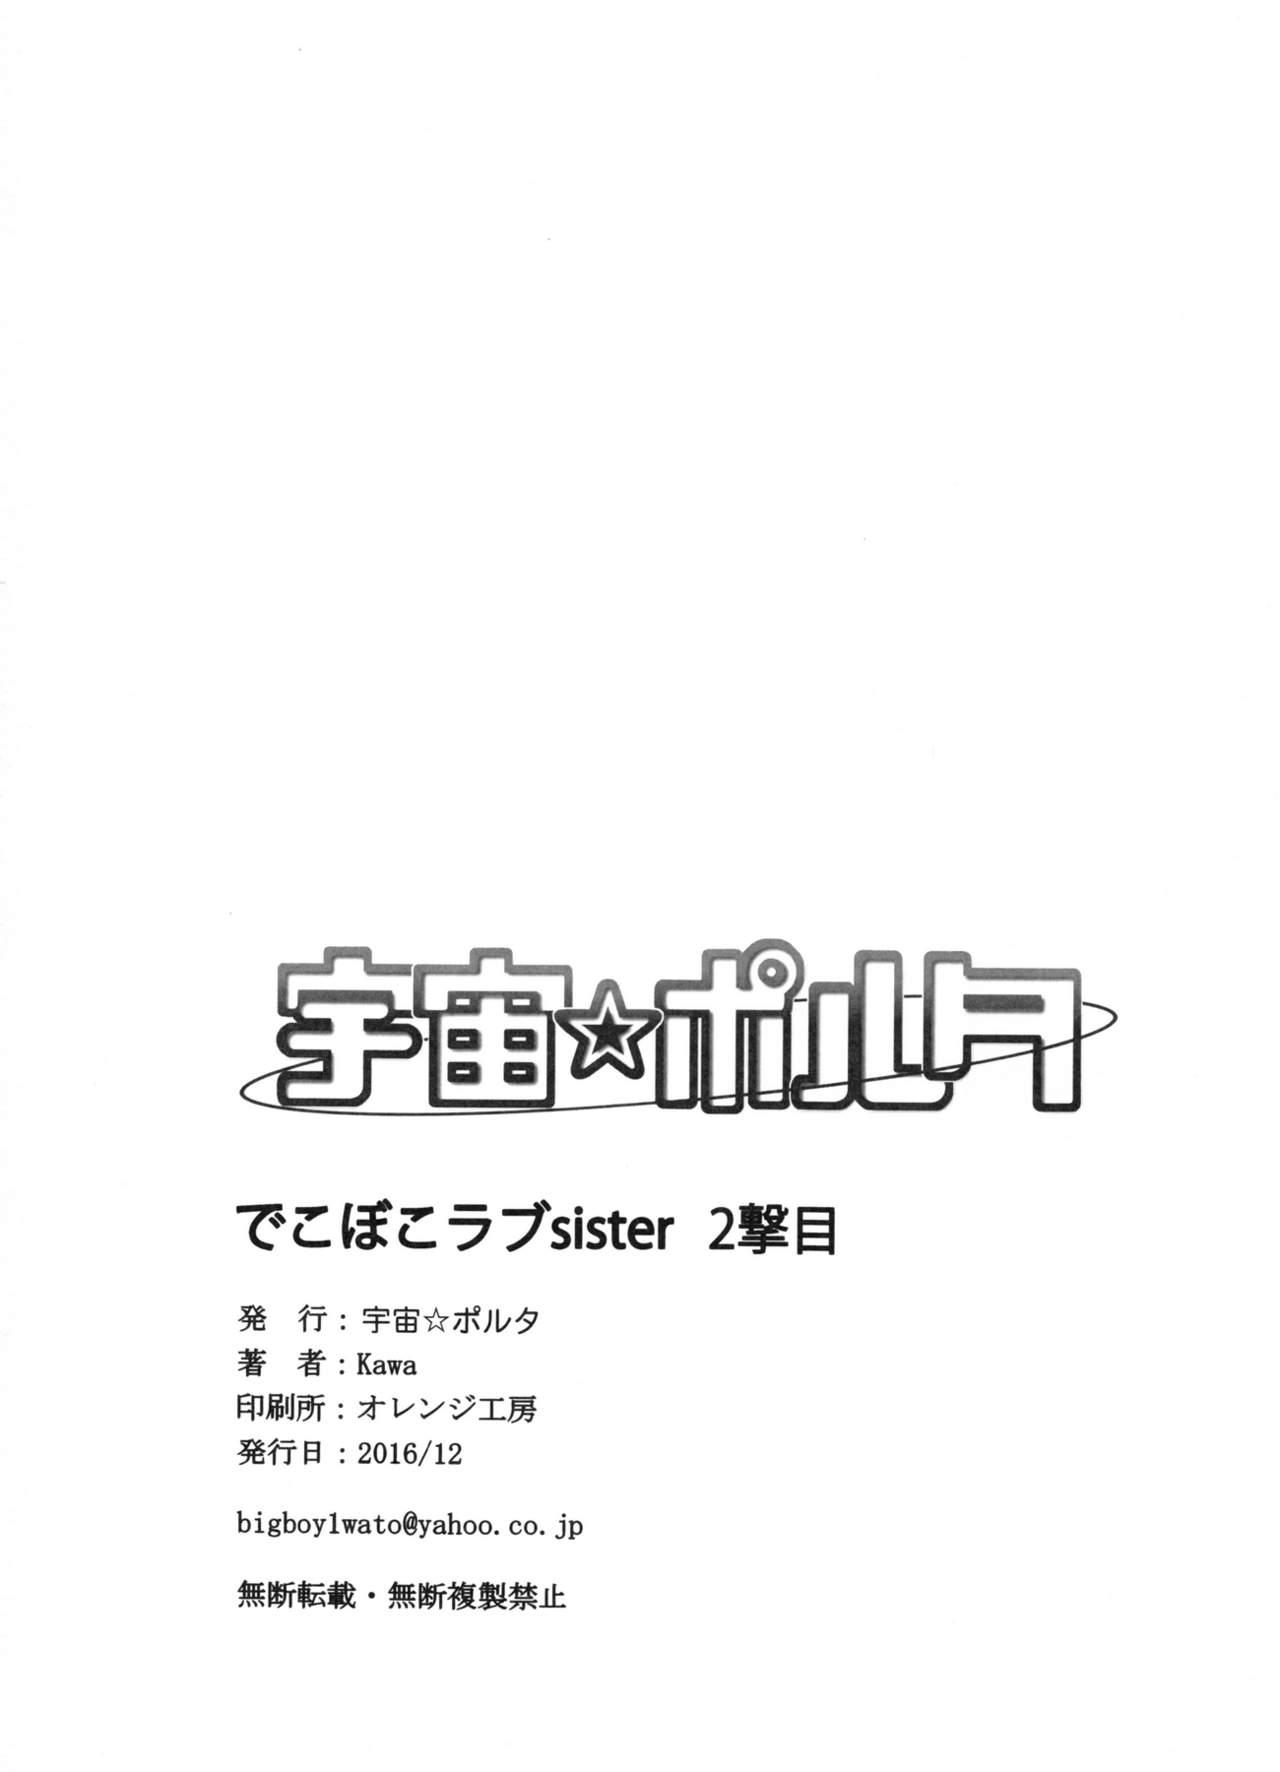 Dekoboko Love Sister 2-gekime! 25